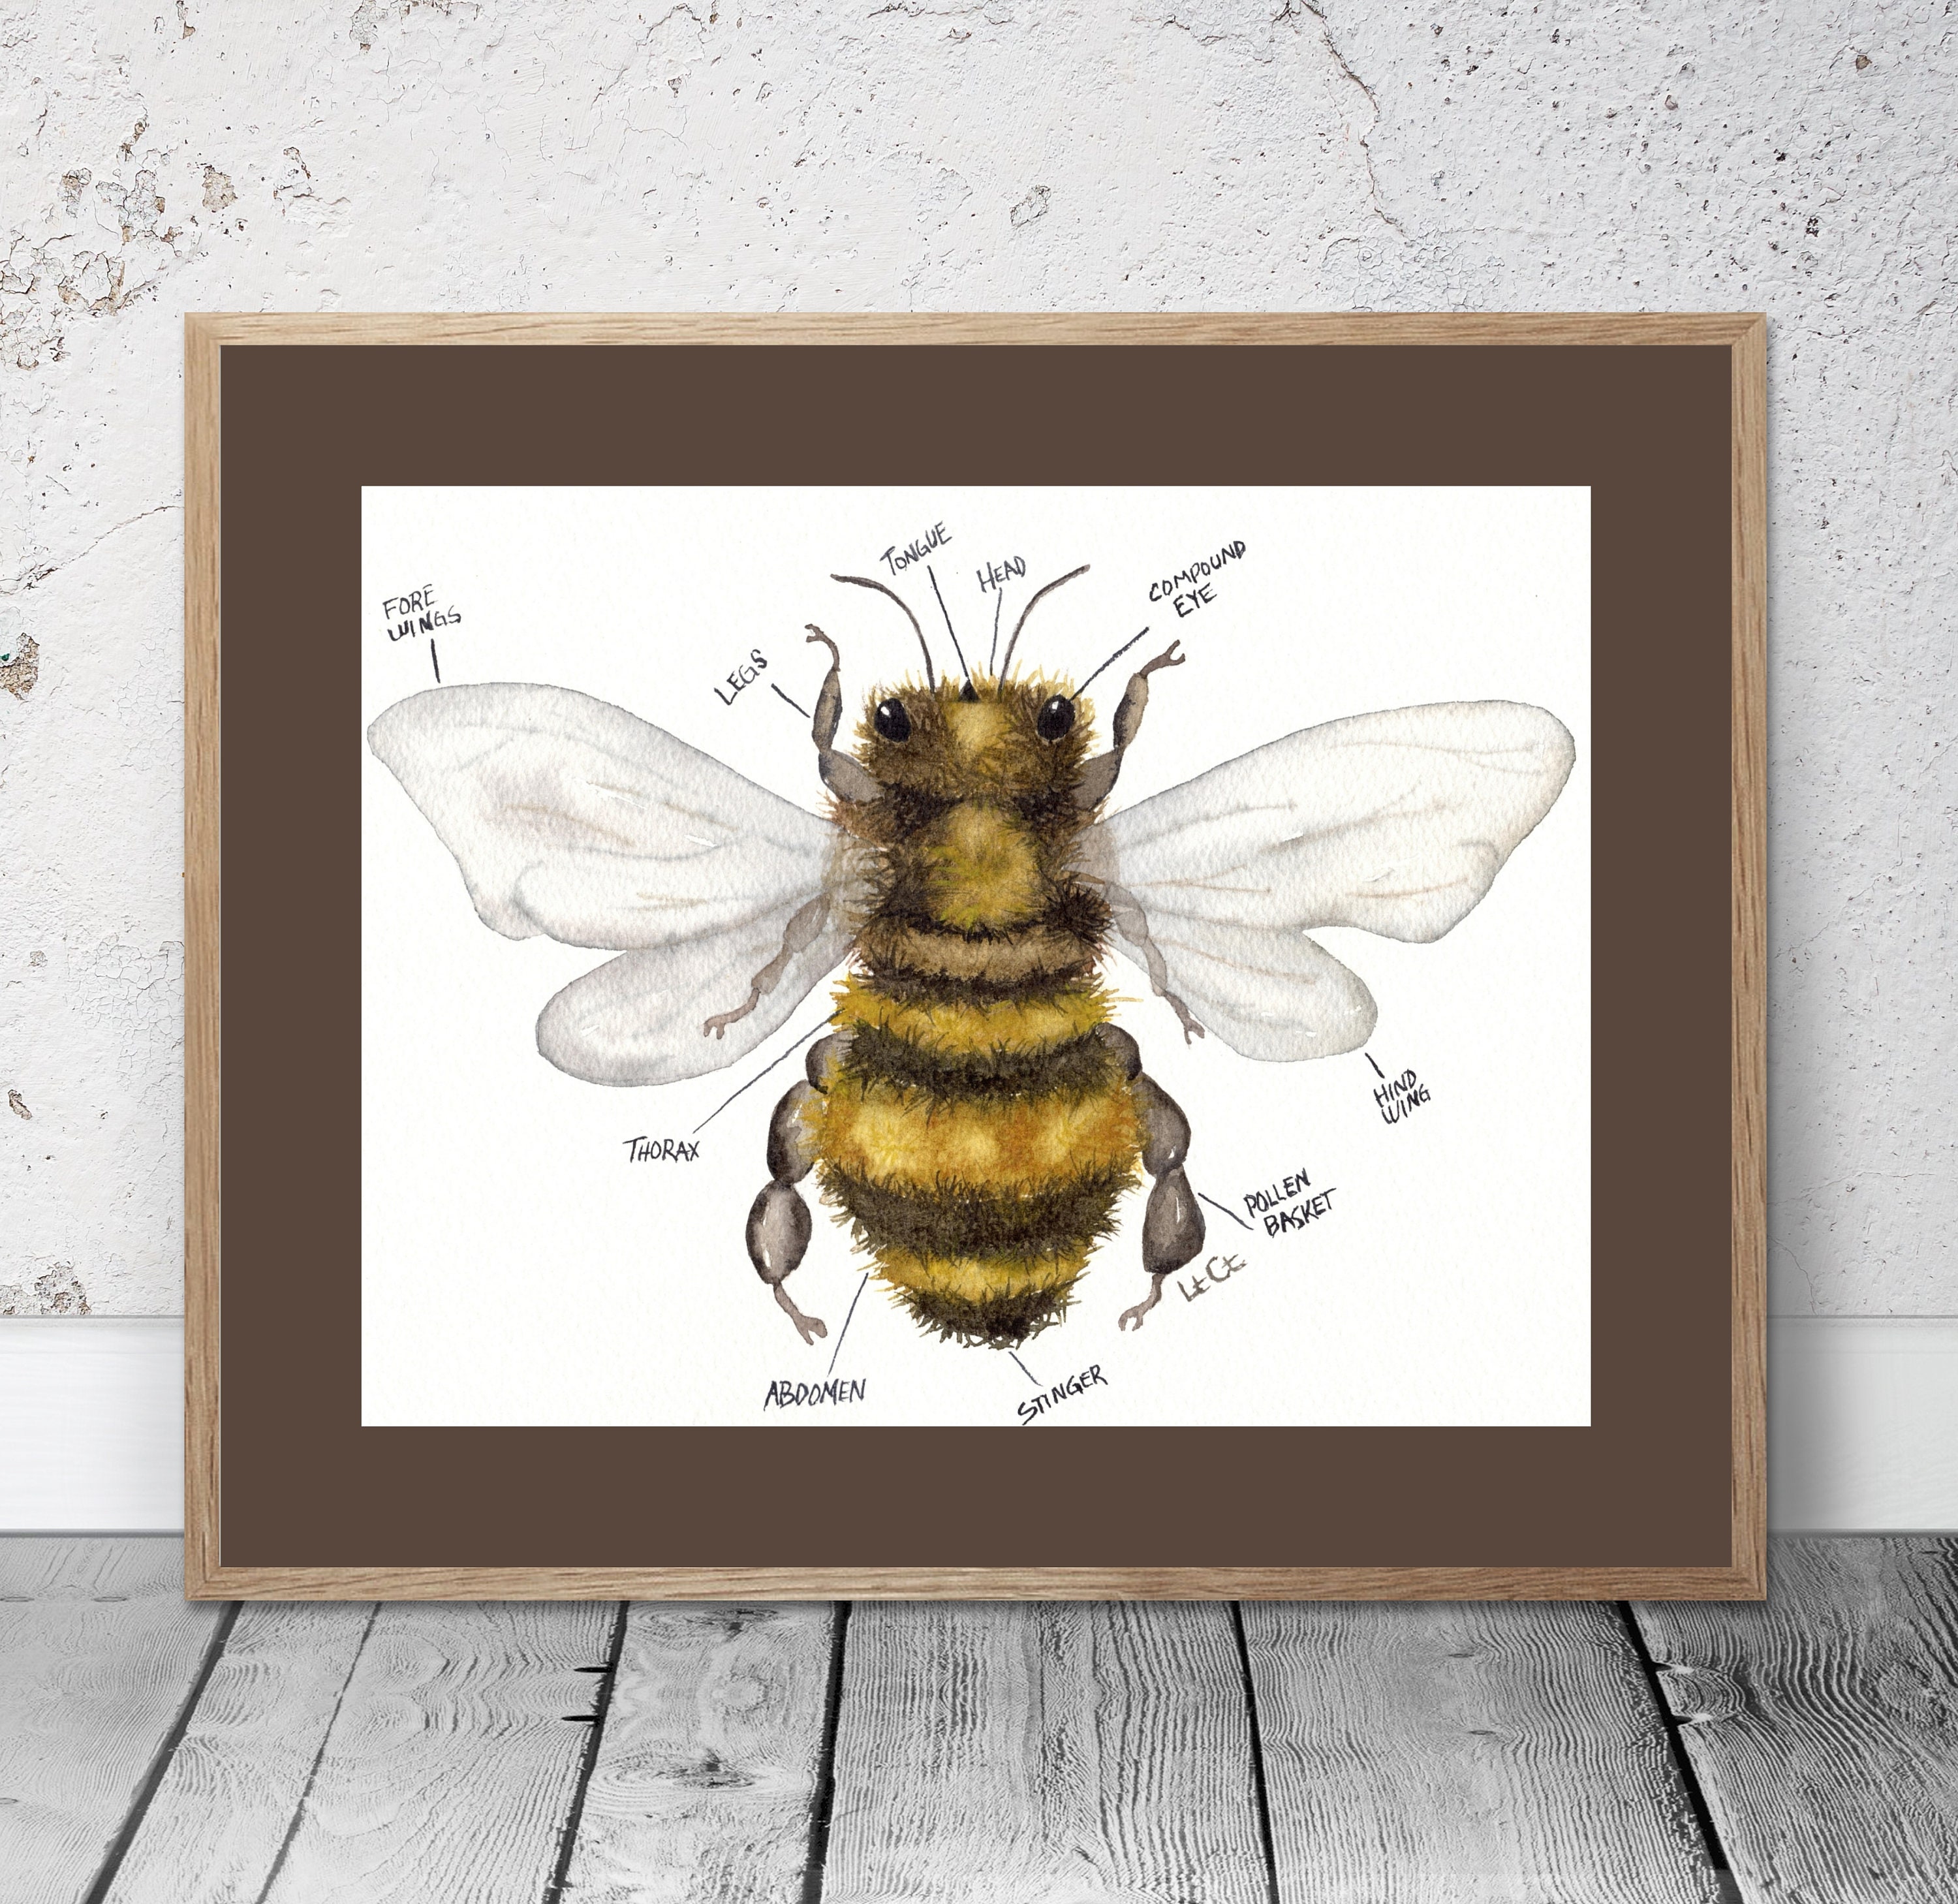 Honey Bee Anatomy – Honey Bee Research Centre